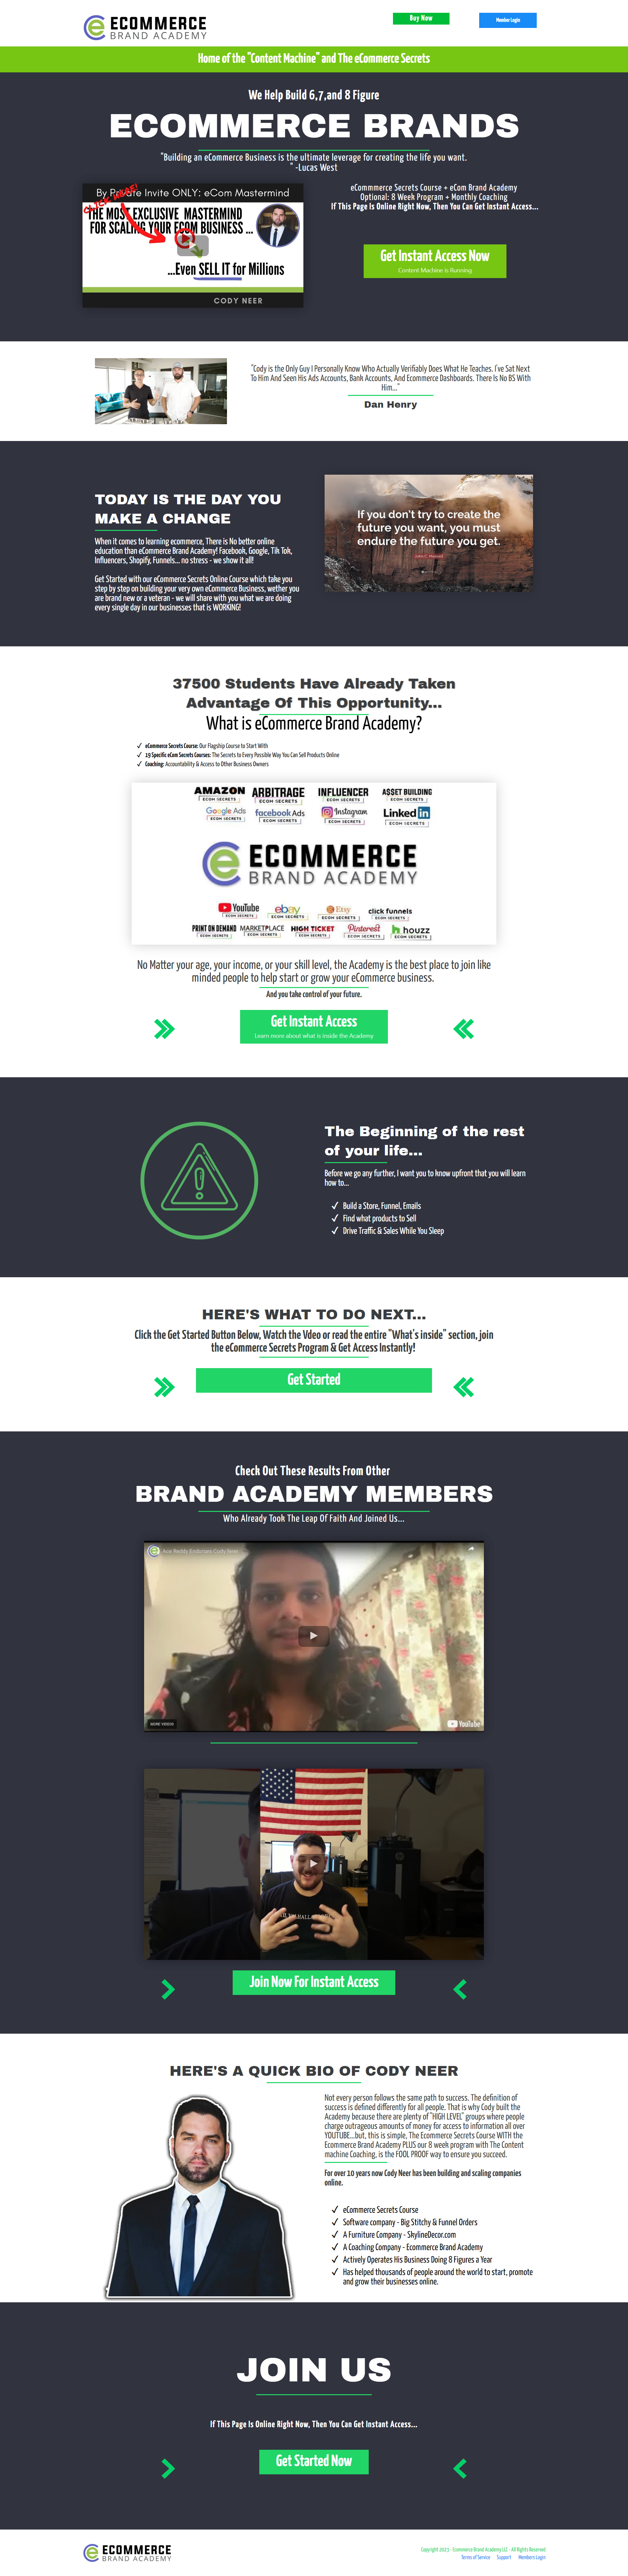 Cody Neer – Ecommerce Brand Academy